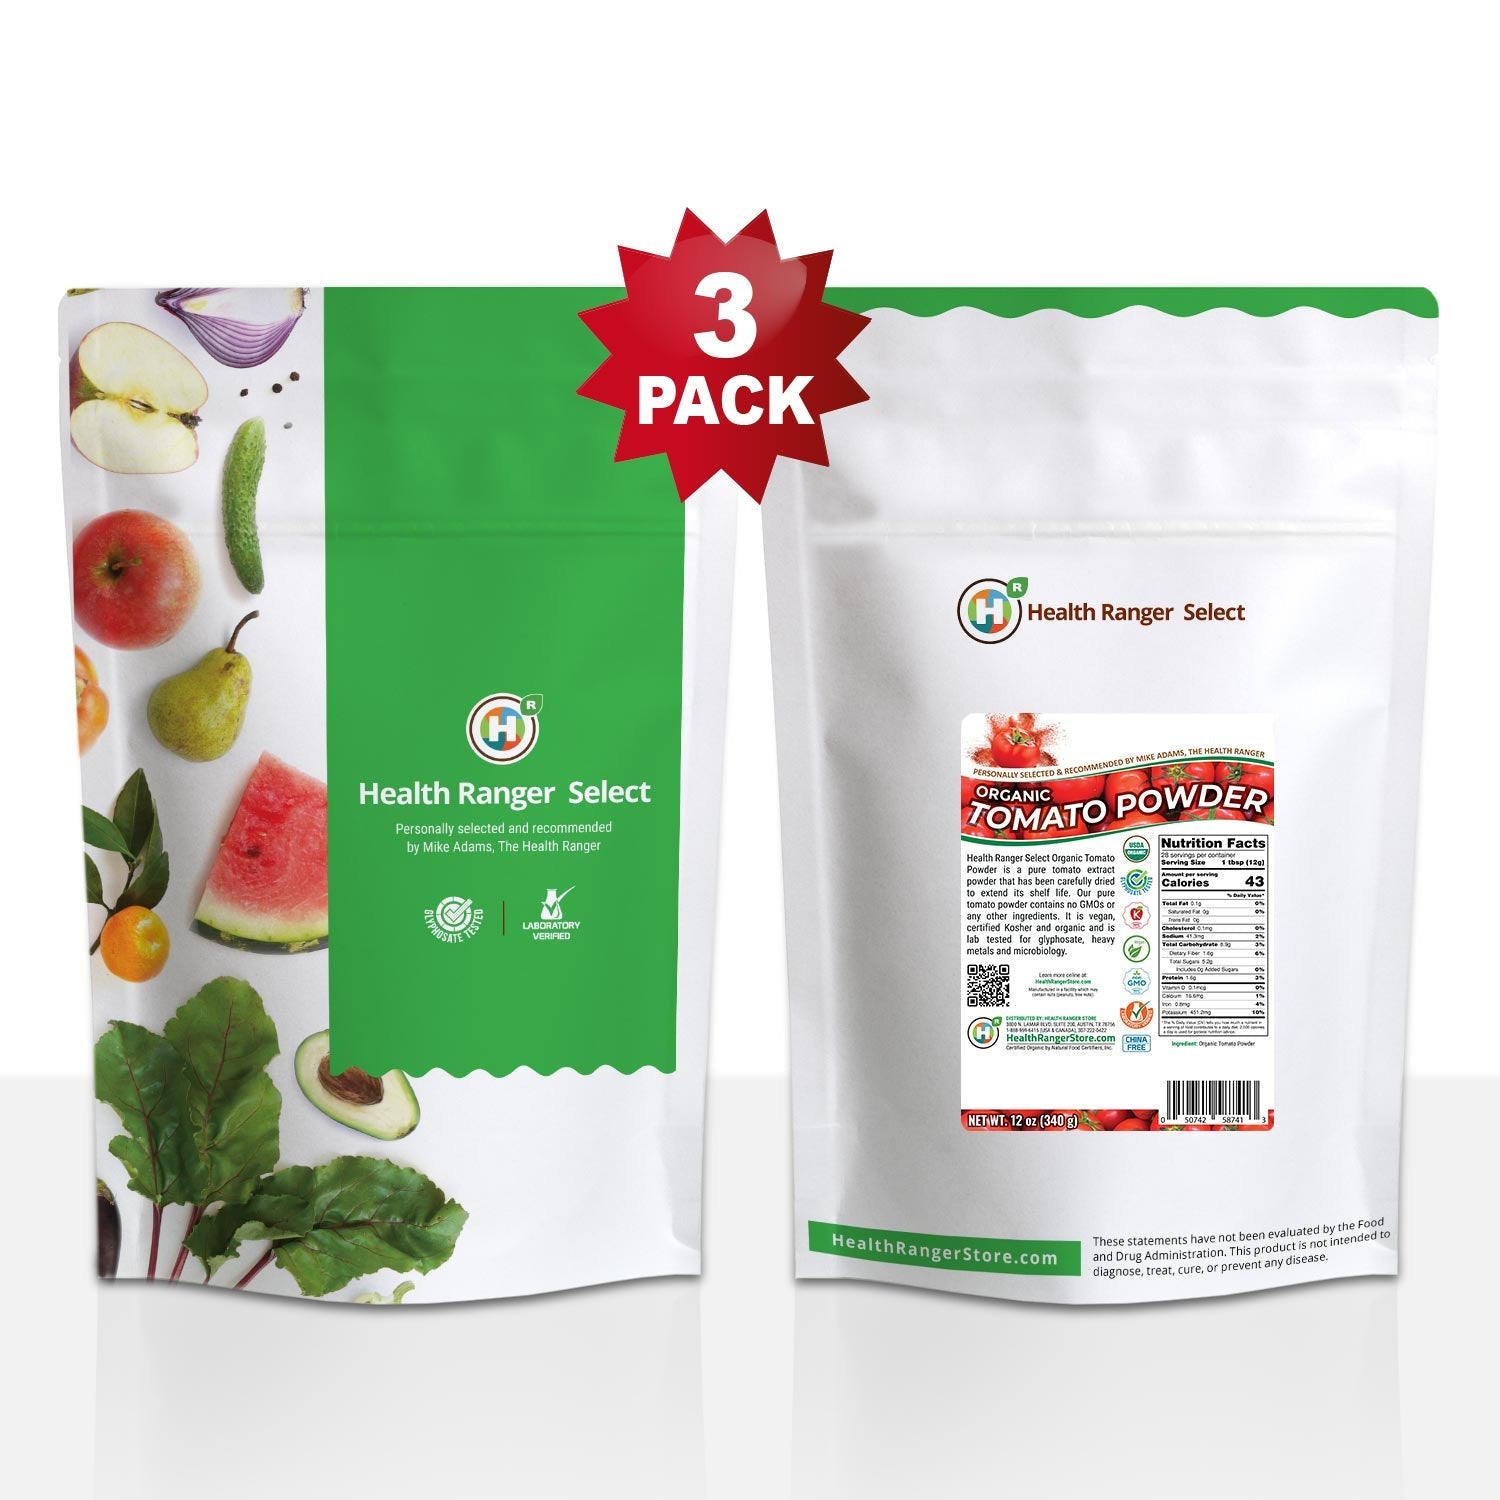 Organic Tomato Powder 12oz (340g) (3-Pack)